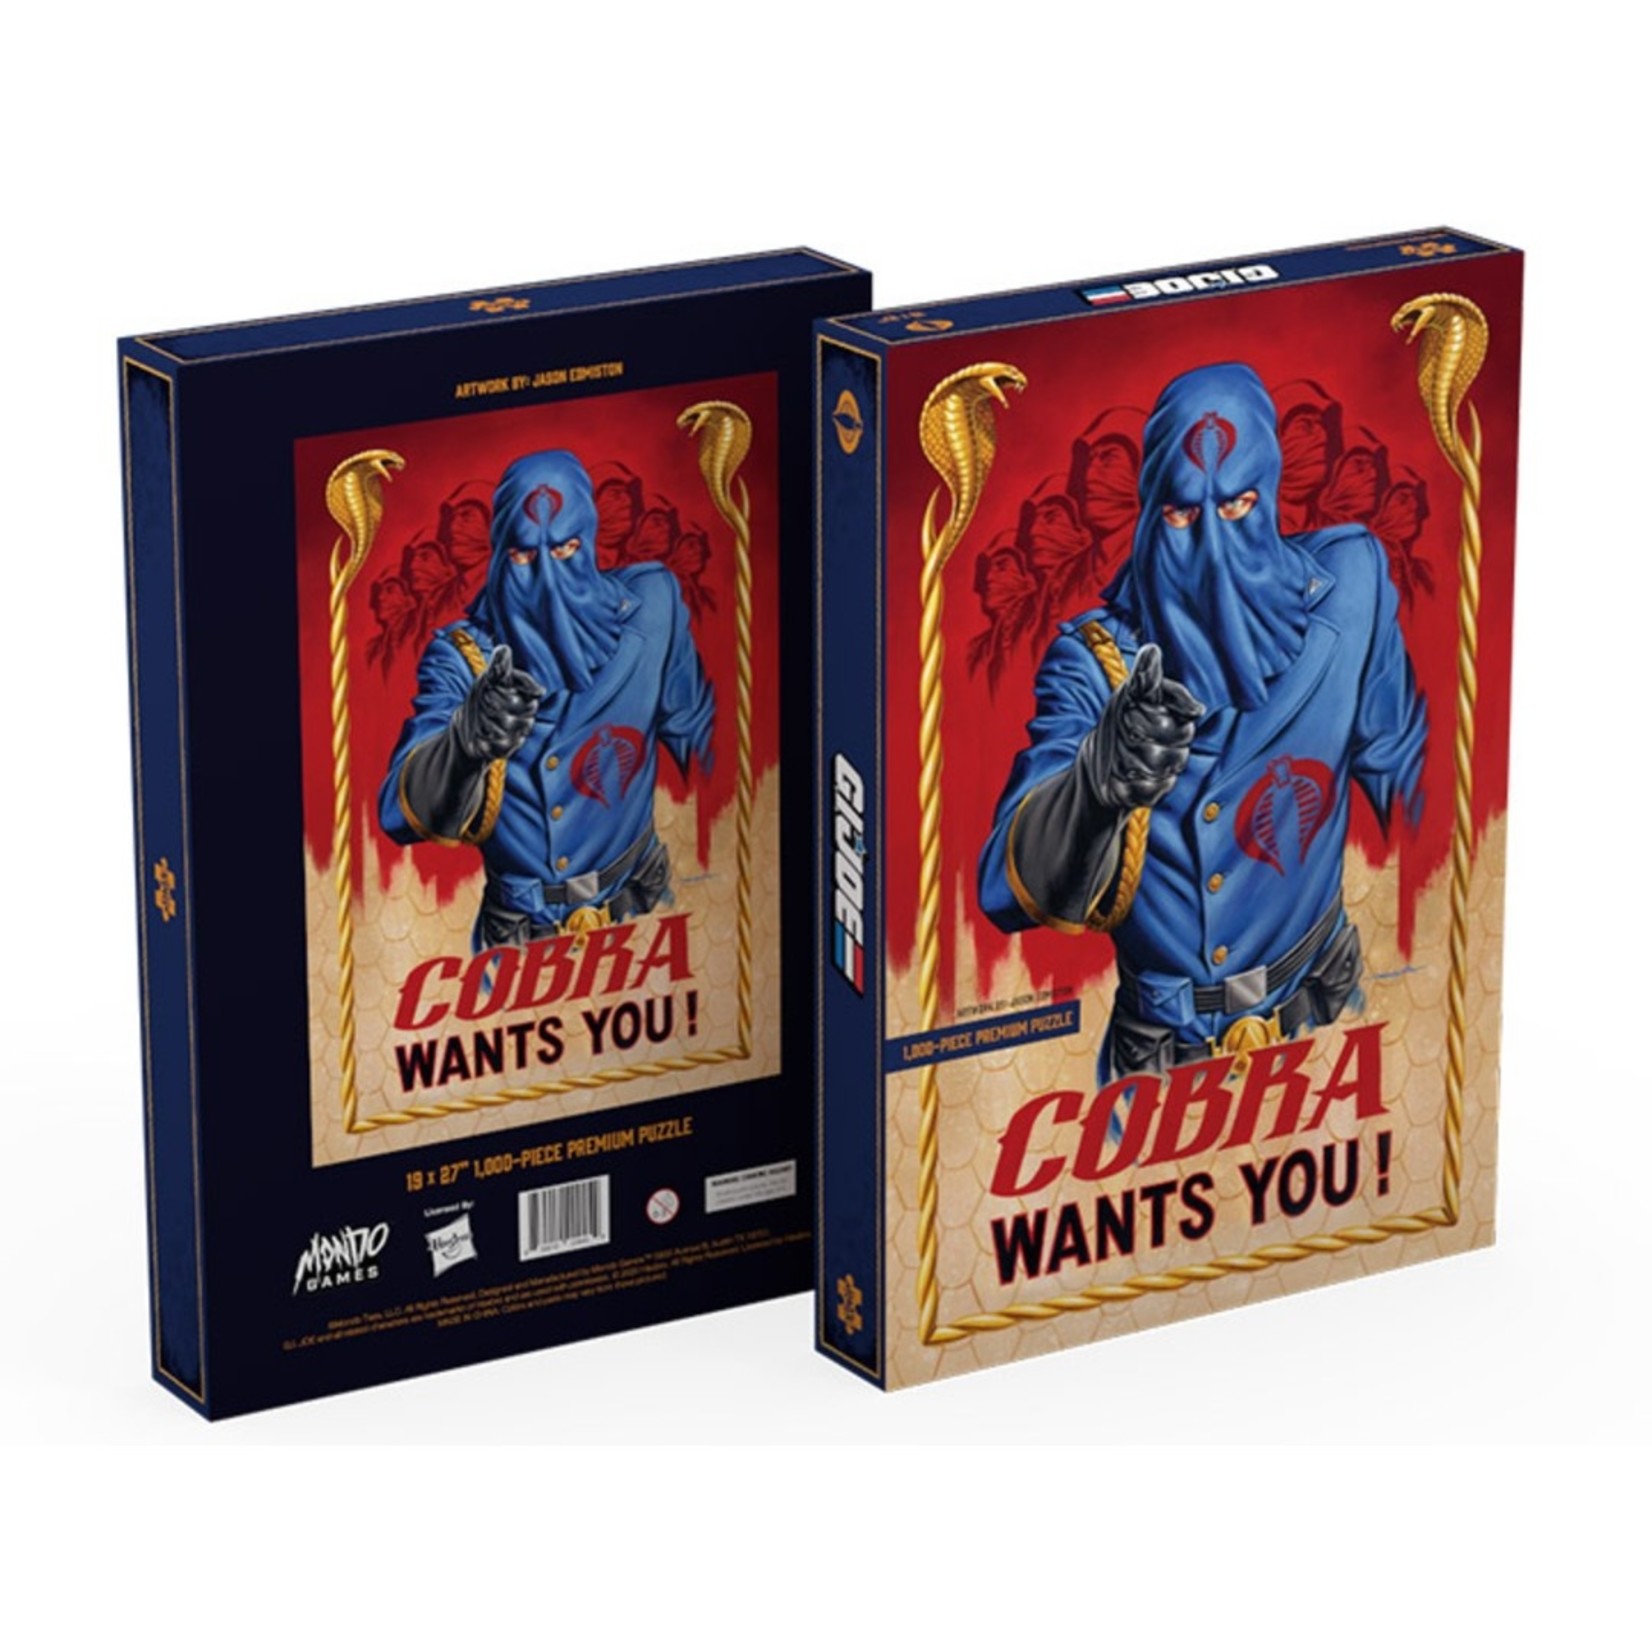 Mondo 1000 pc Puzzle G.I. Joe Cobra Wants You!